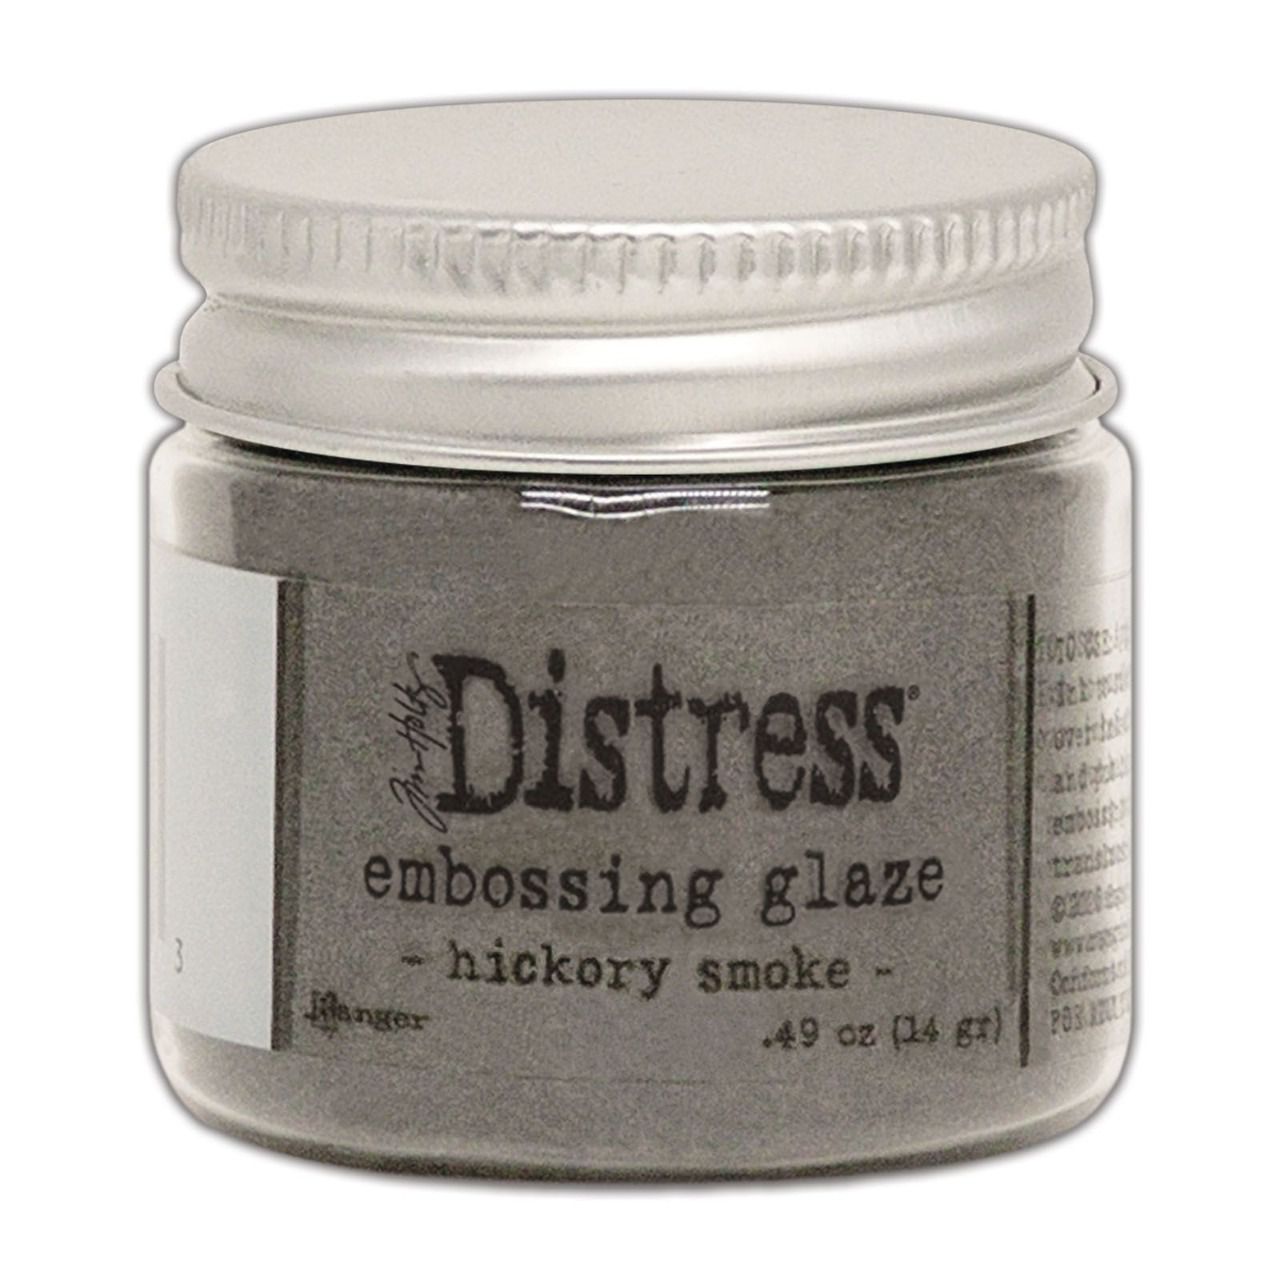 Distress Embossing glaze, Tim Holtz, couleur : Hickory smoke